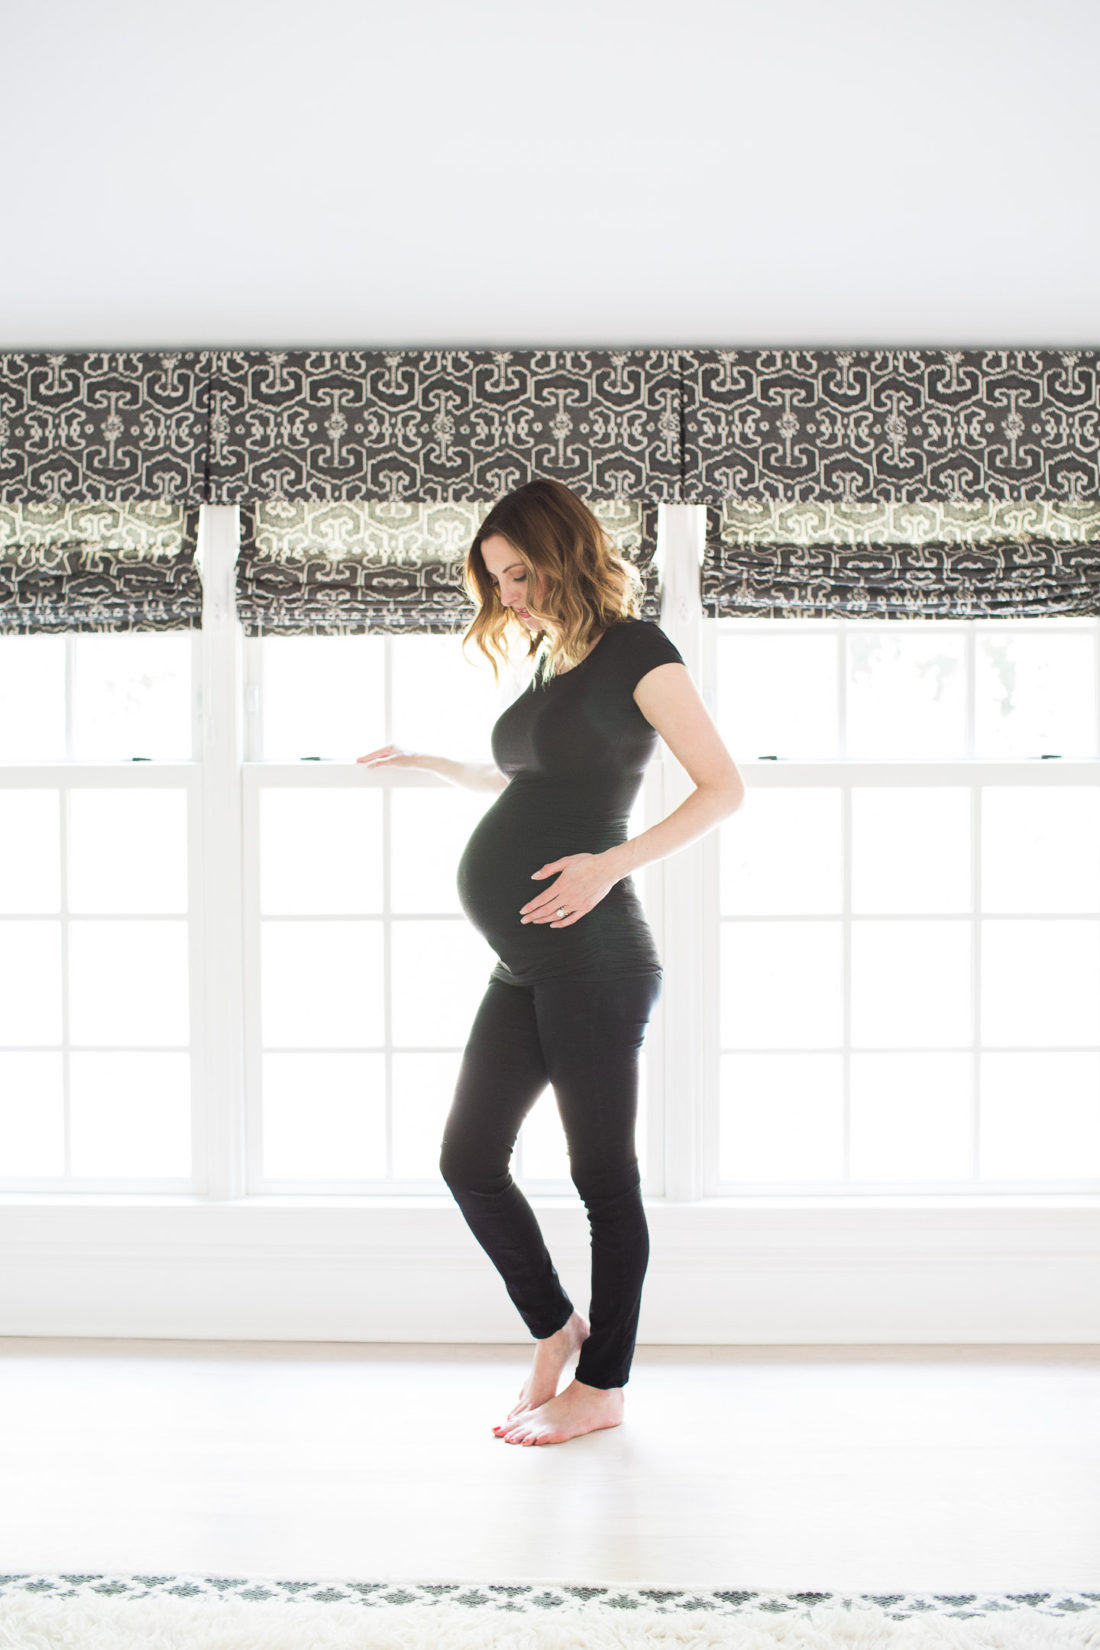 Eva Amurri Martino of lifestyle and motherhood blog Happily Eva After, wearing all black and cradling her baby bump